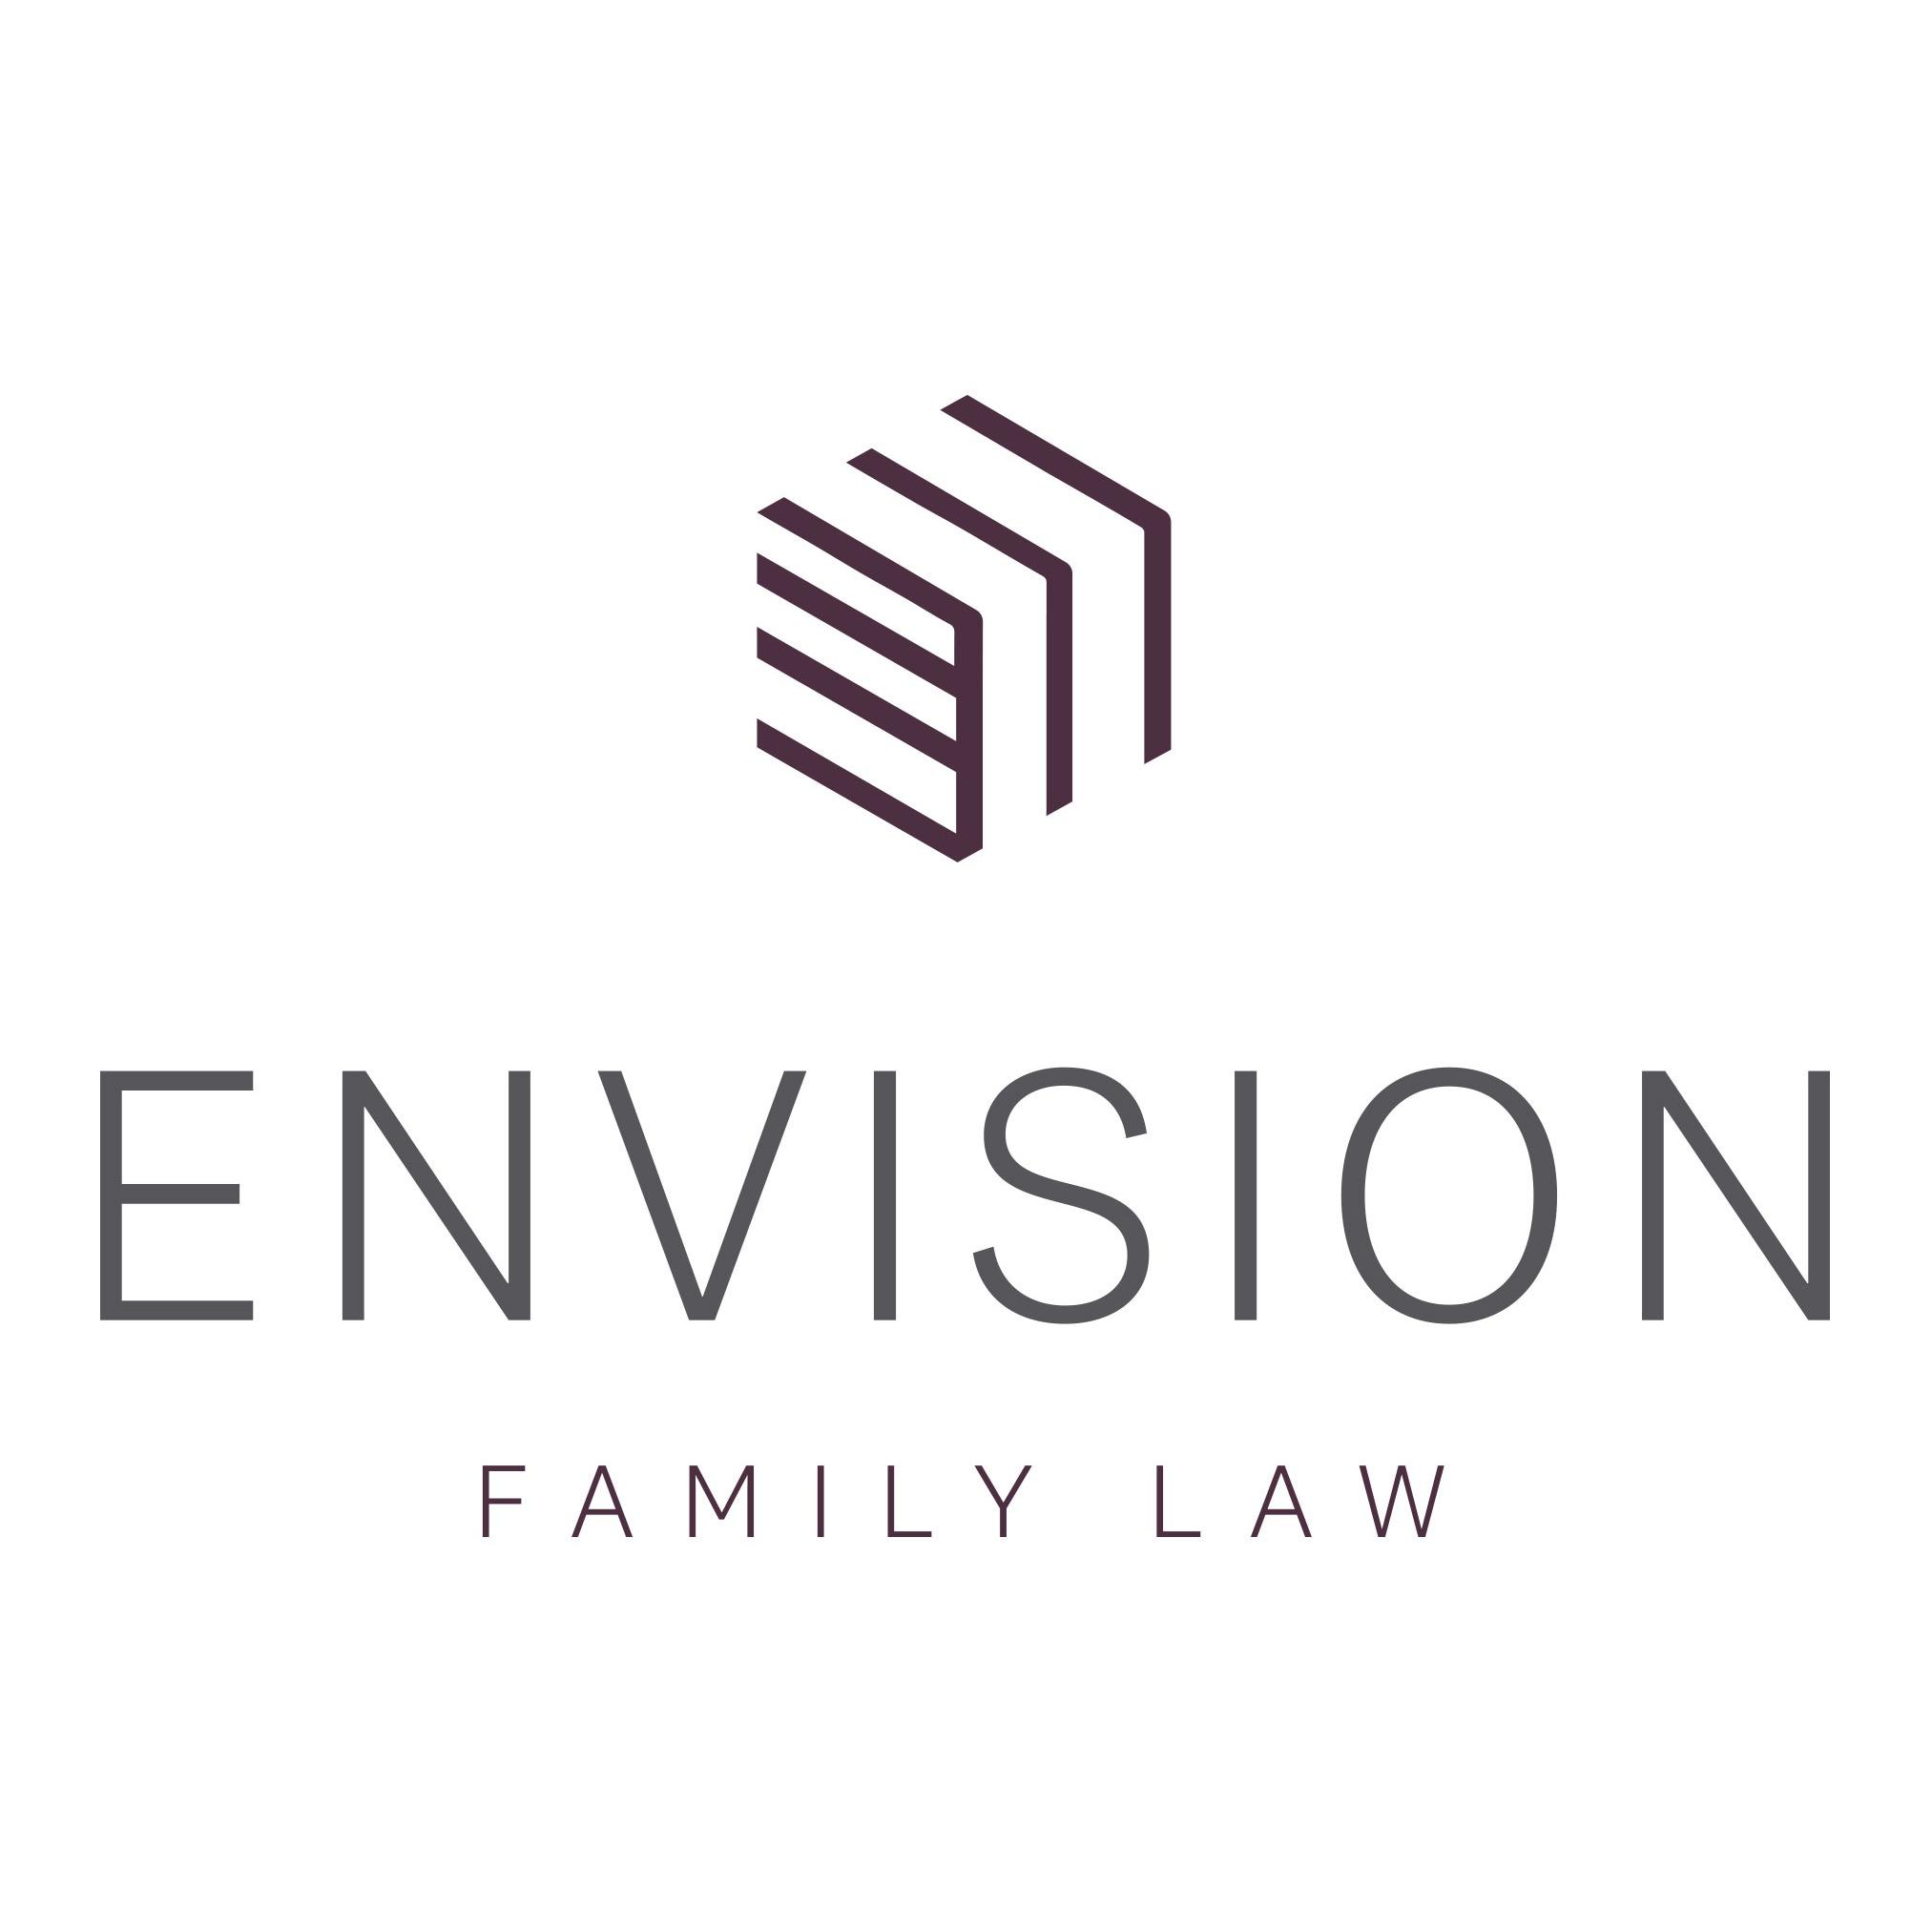 Envision Family Law Logo